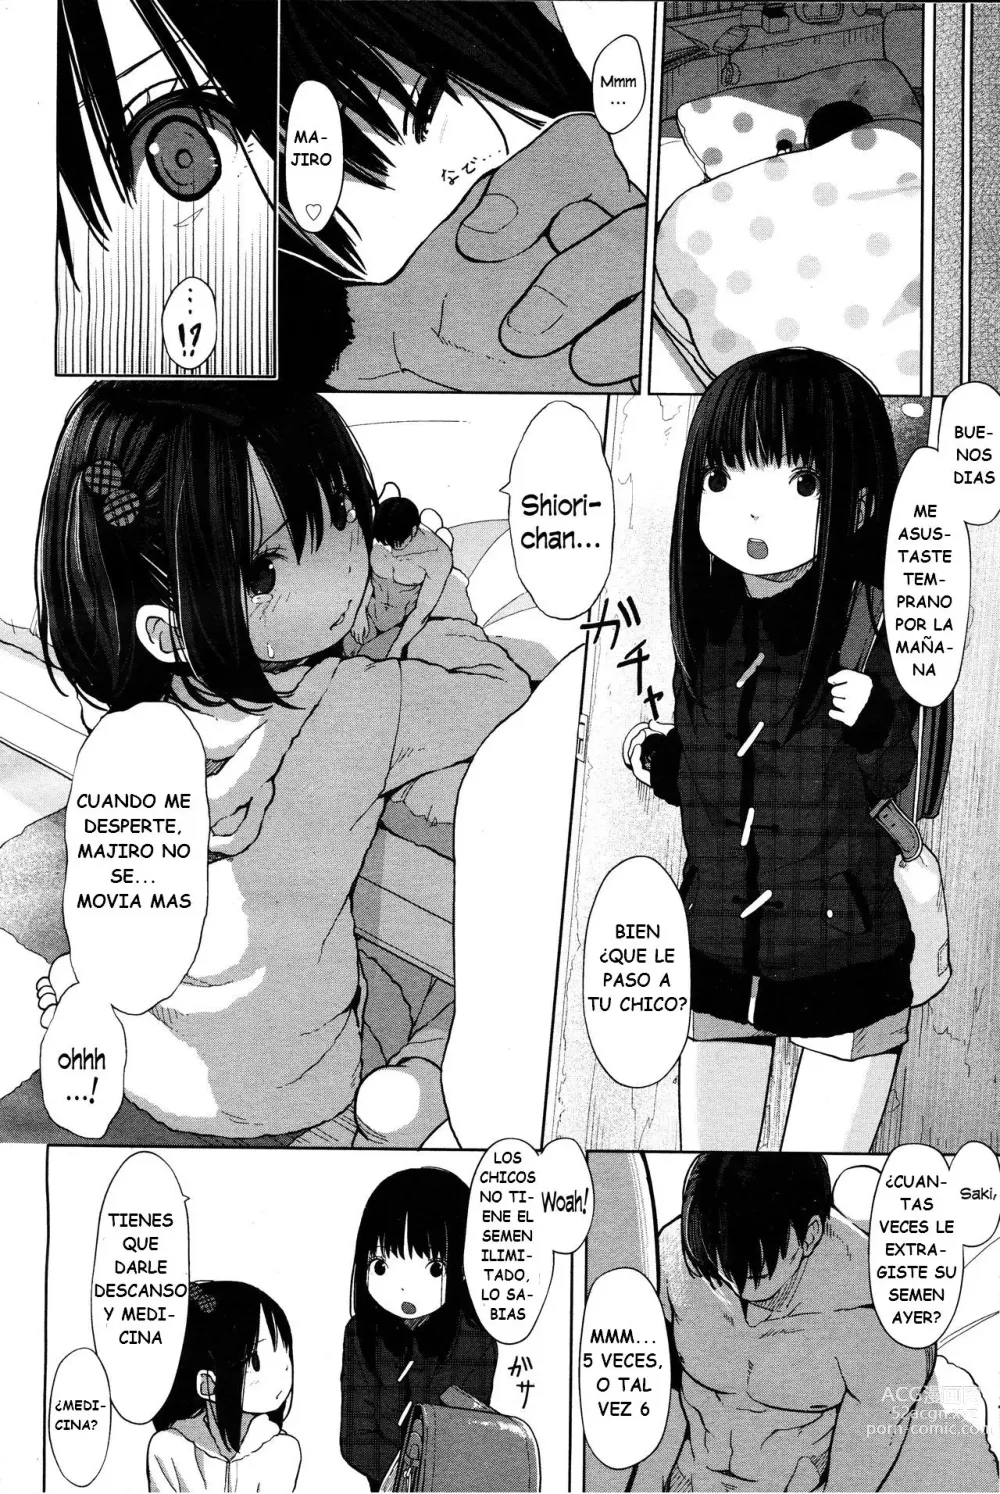 Page 14 of manga Tiny Titan